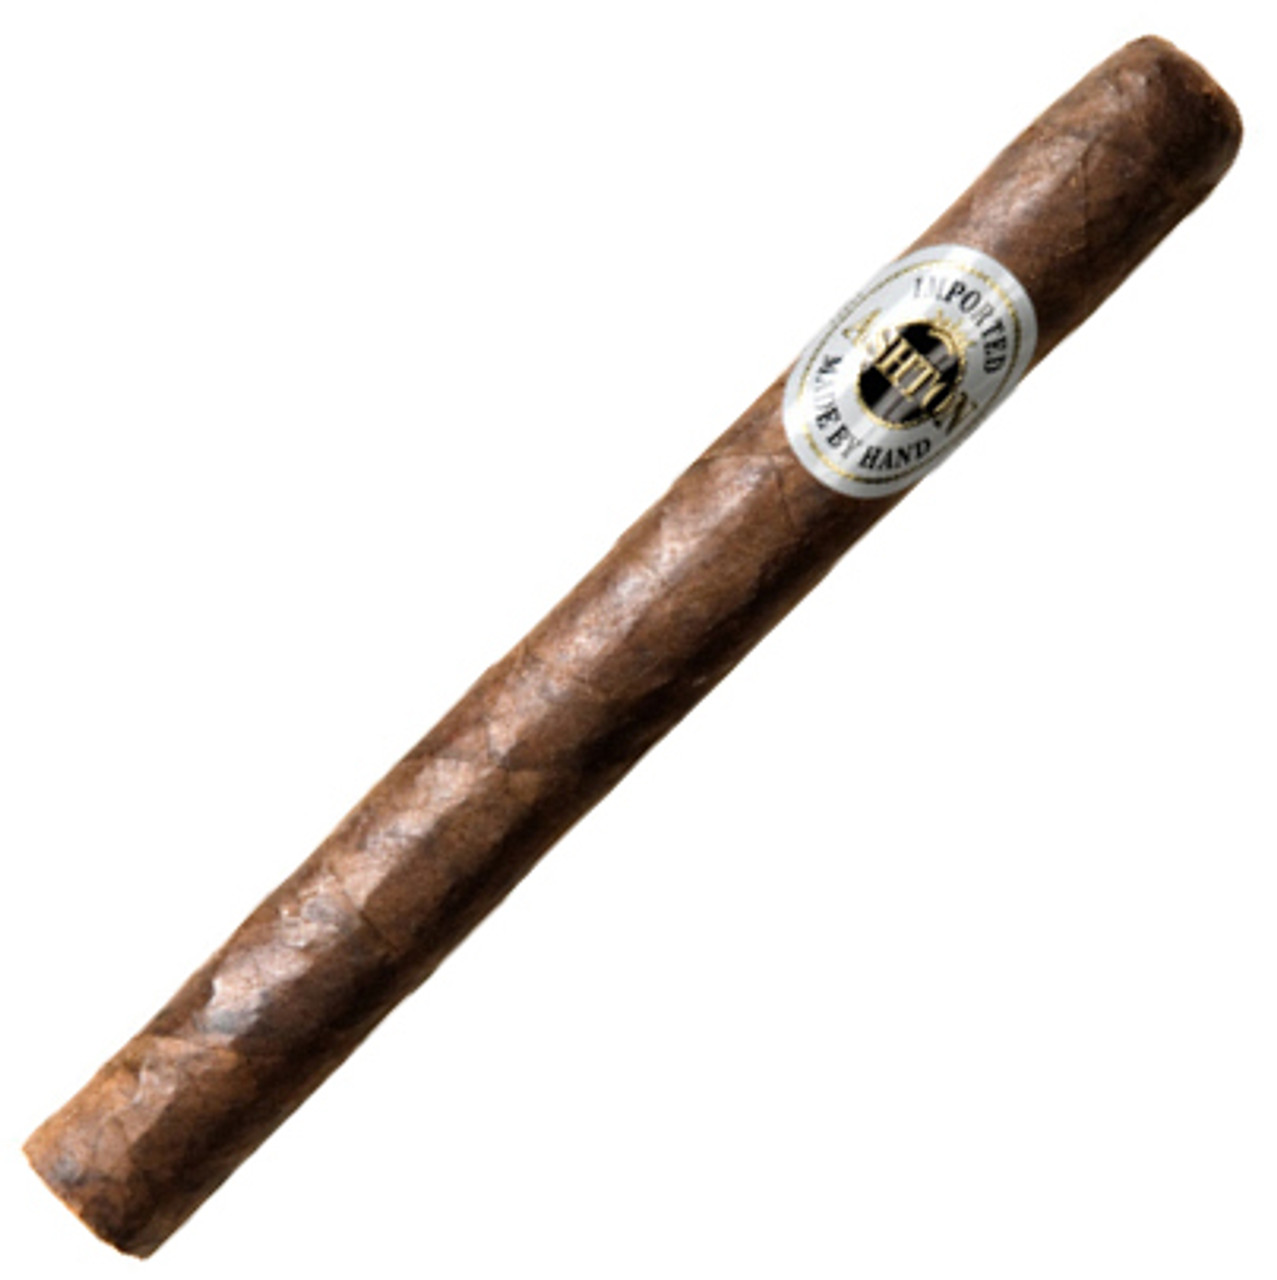 Ashton Aged Maduro No. 50 Cigars - 7 x 48 Single